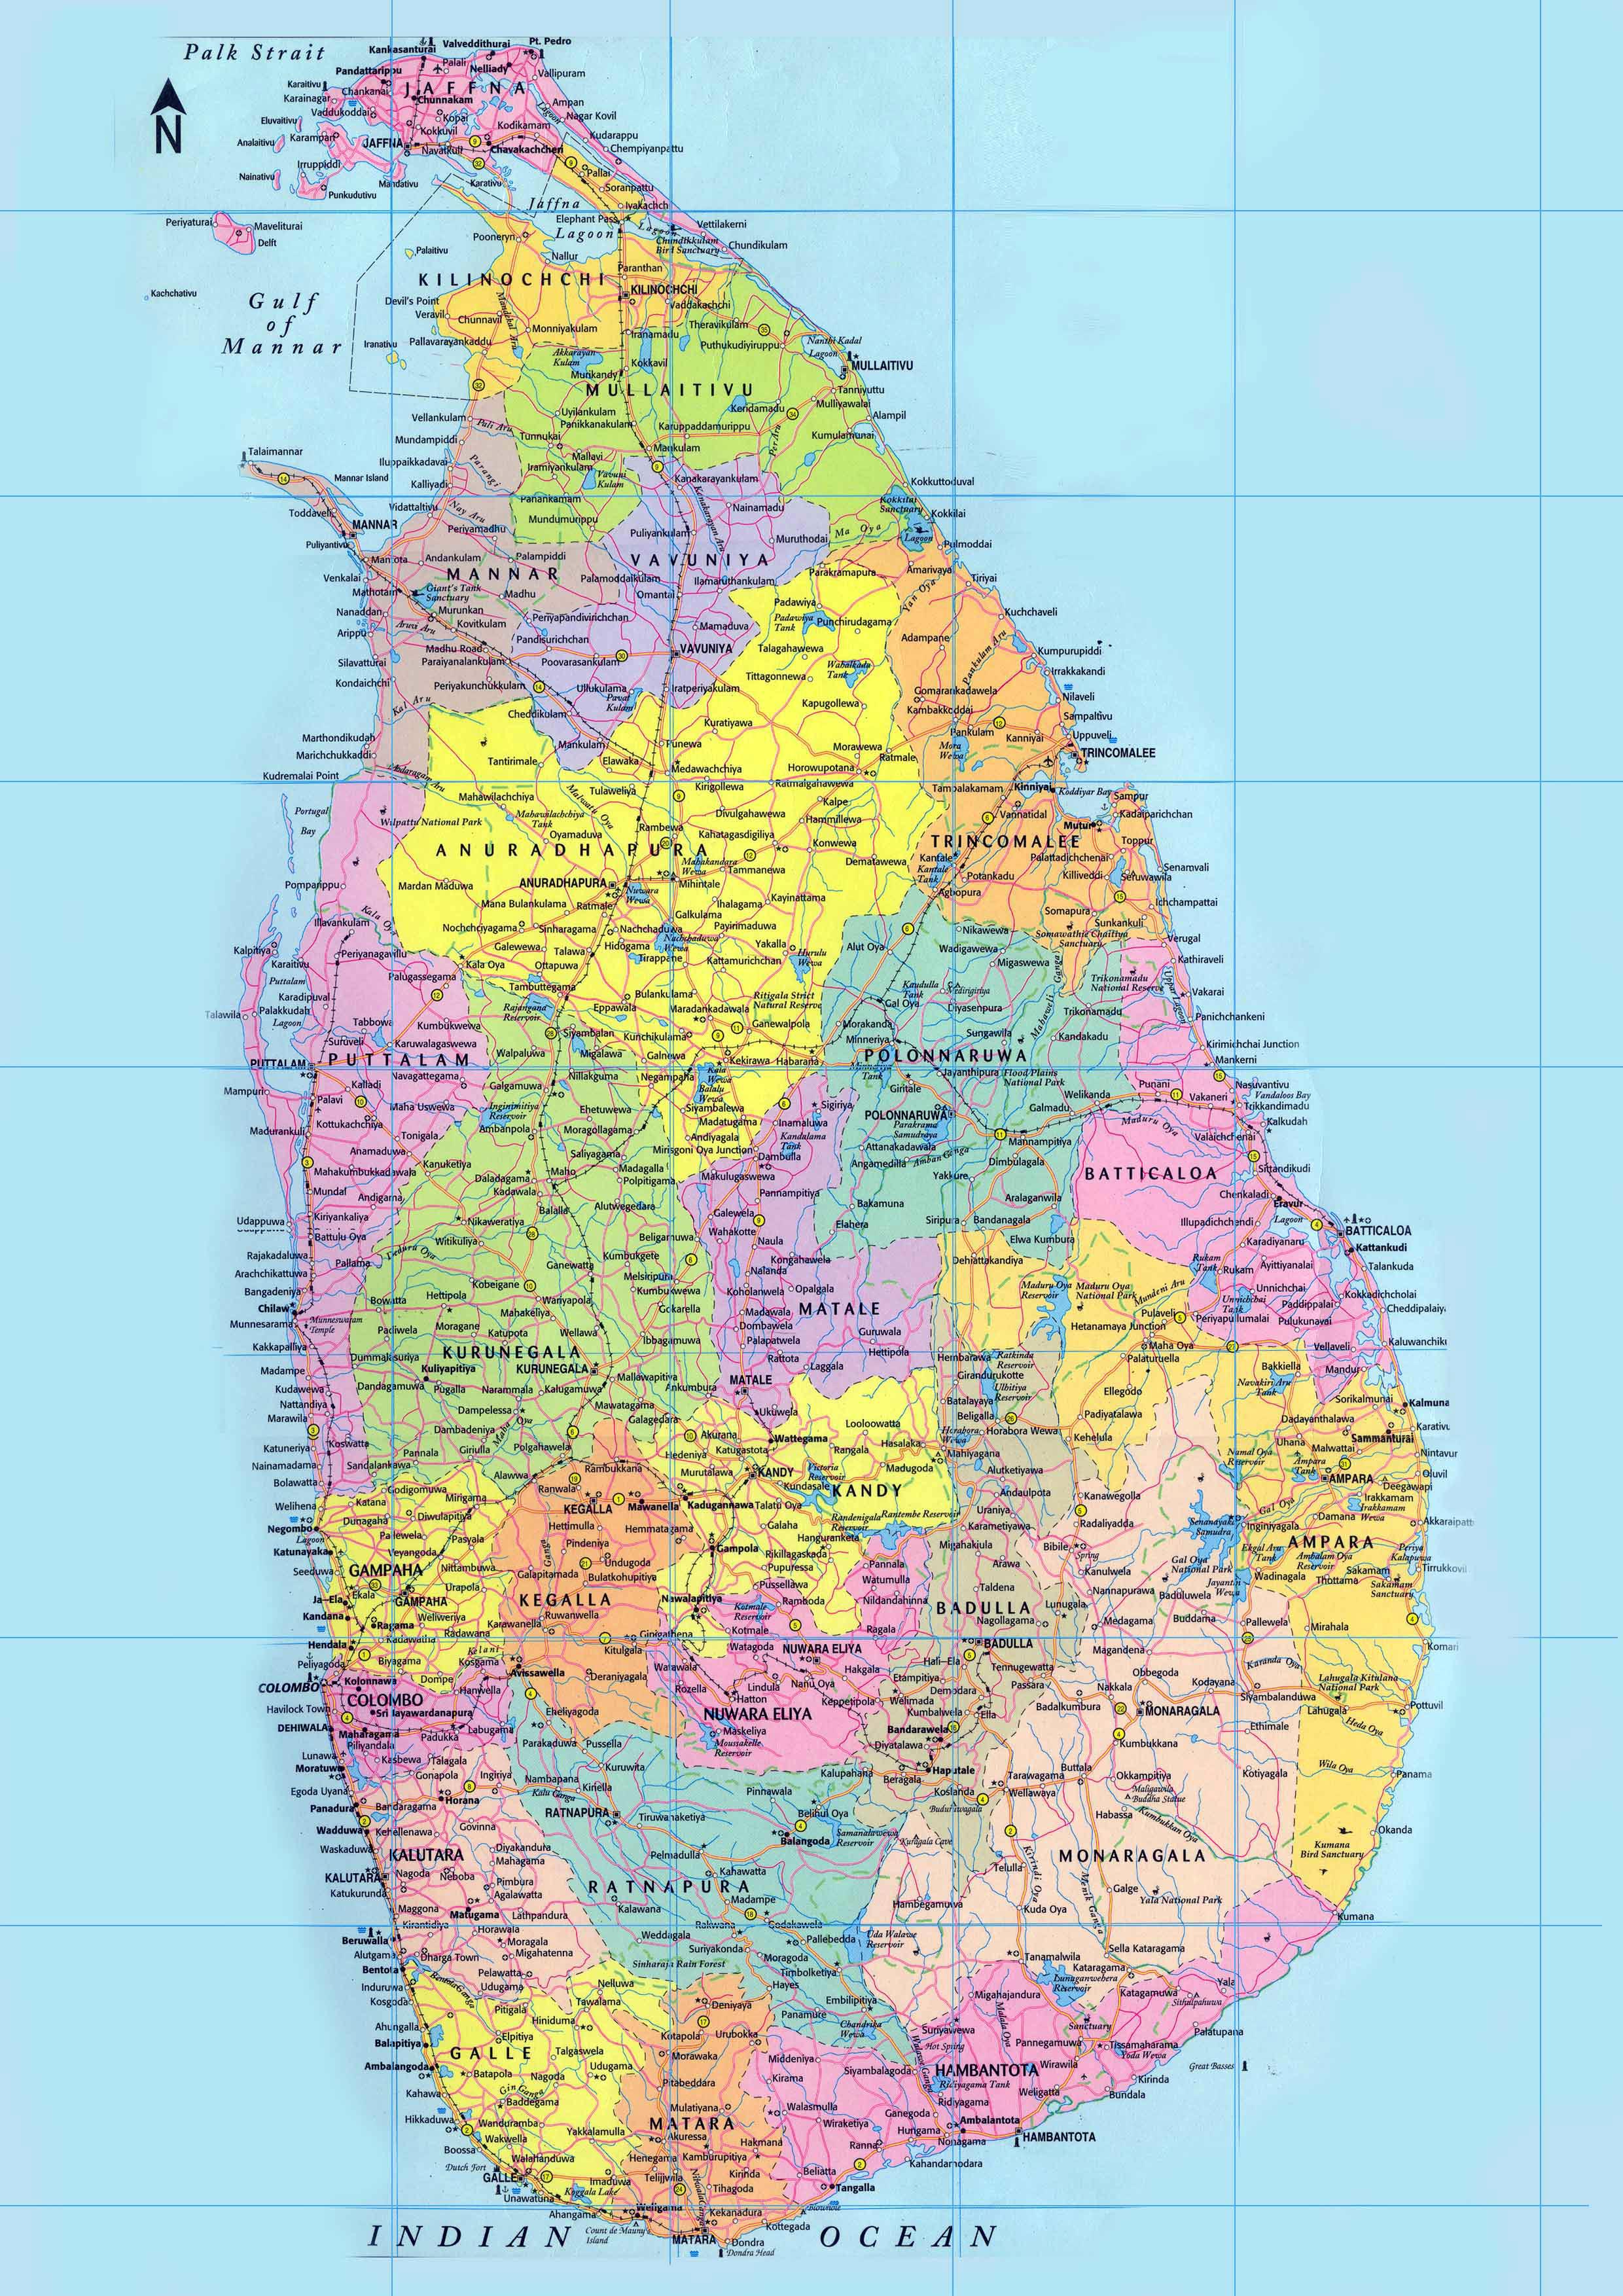 Sri Lanka Road Map Distance Chart